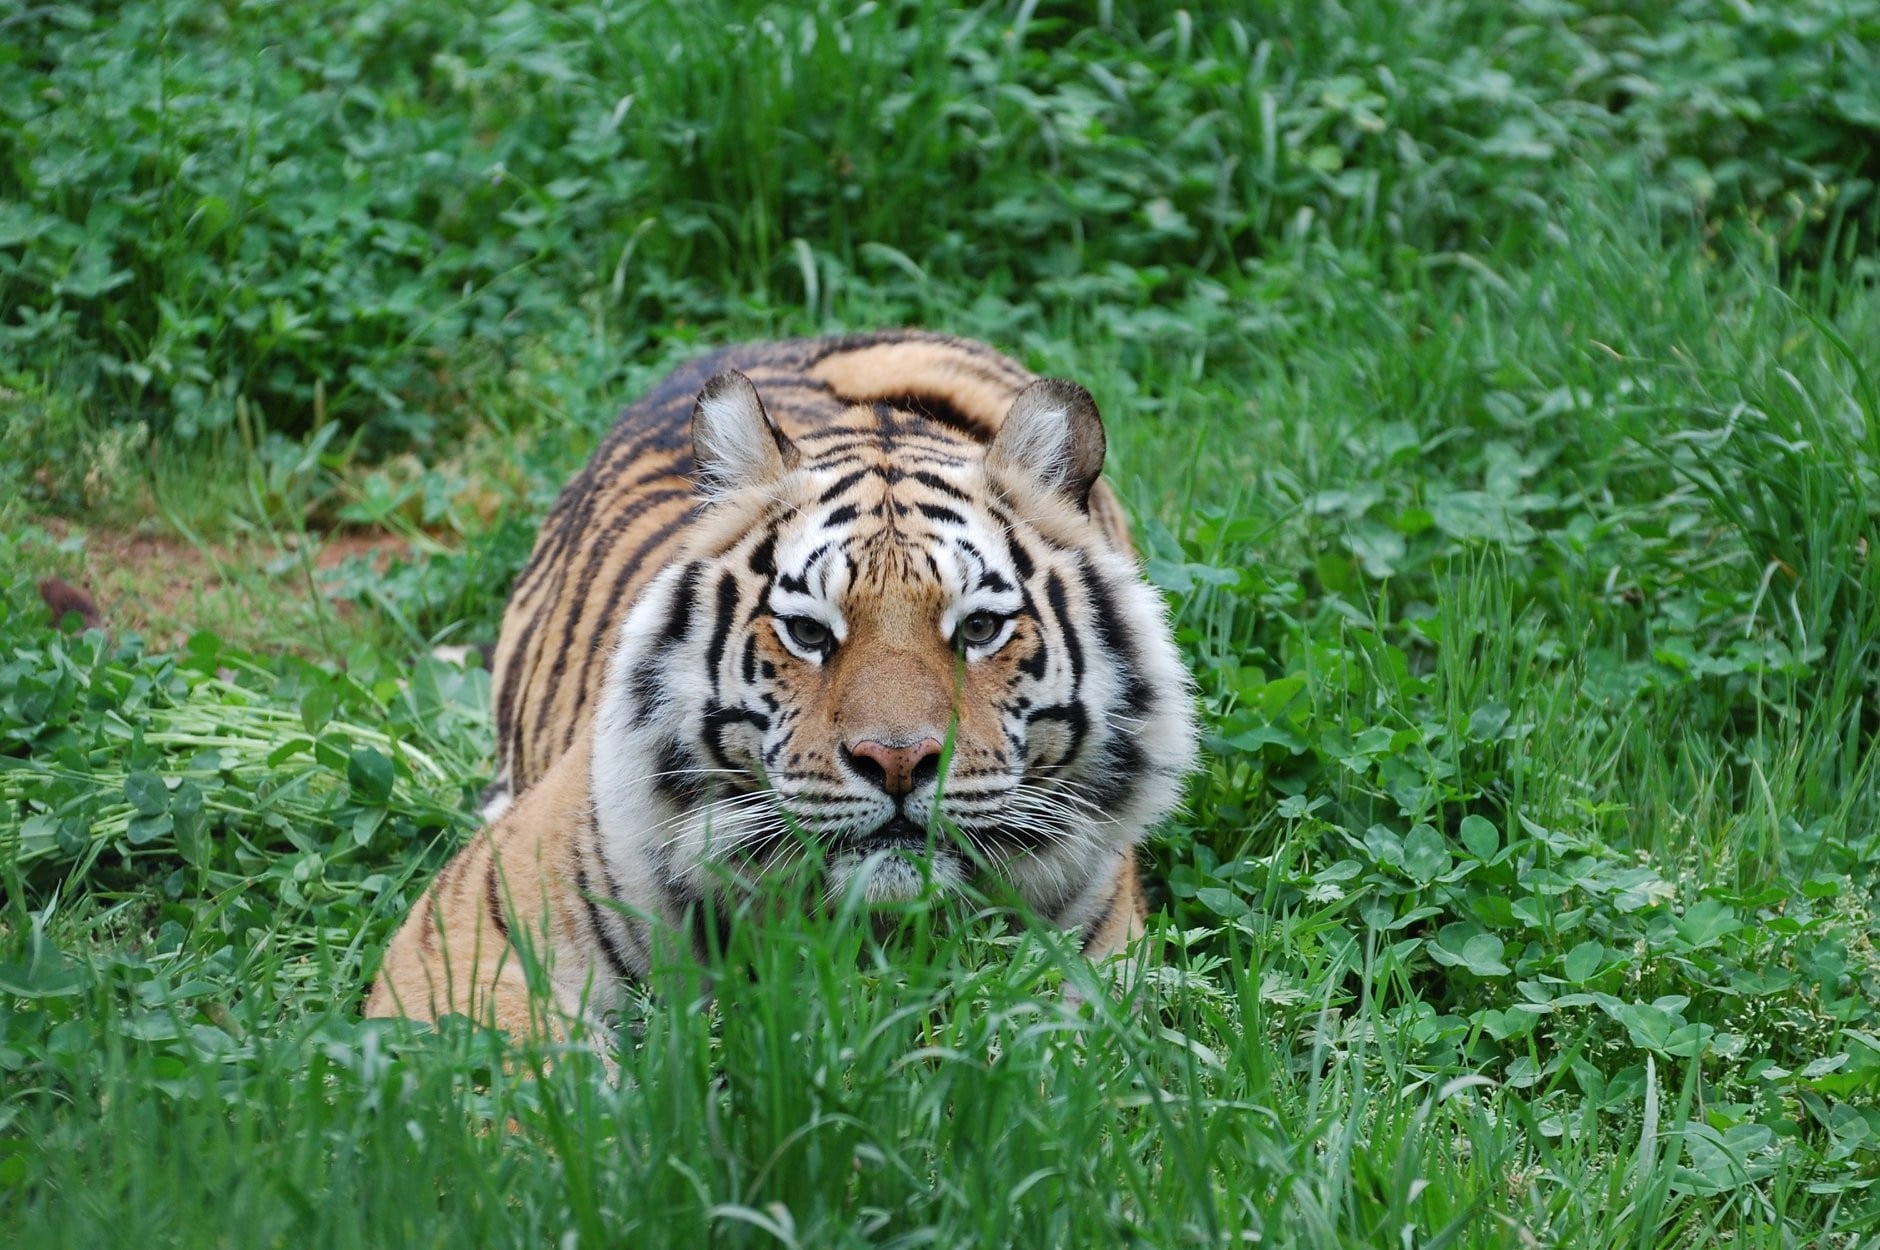 Tiger in grass